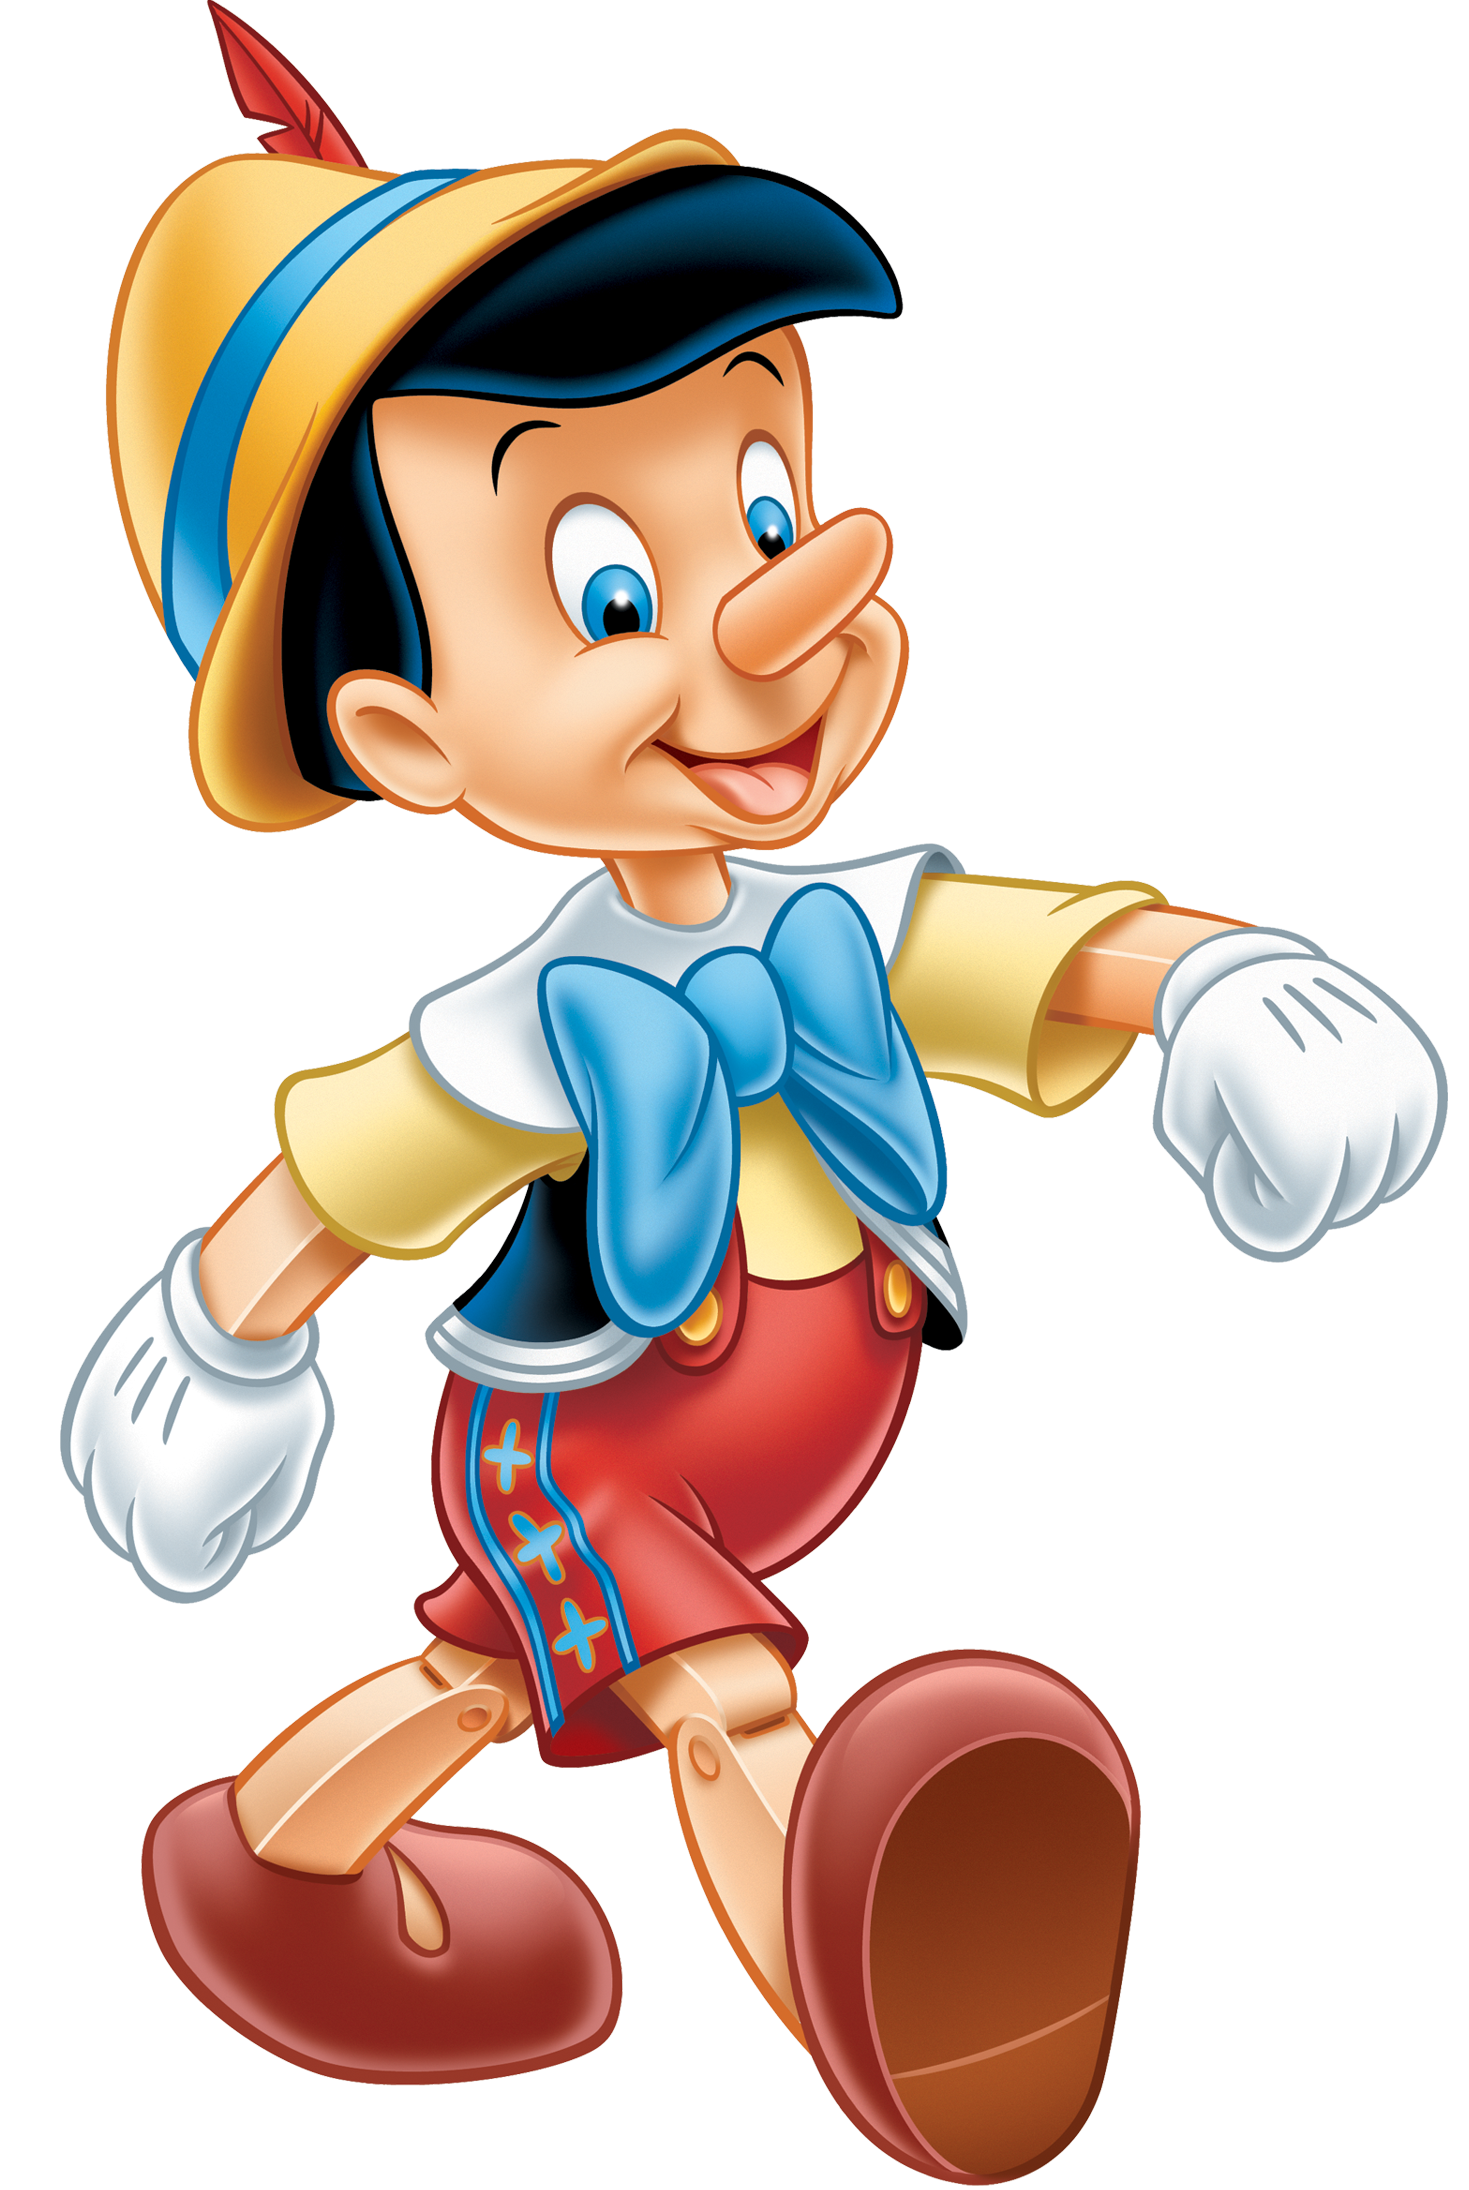 Dust clipart star disney. Pinocchio wiki fandom powered